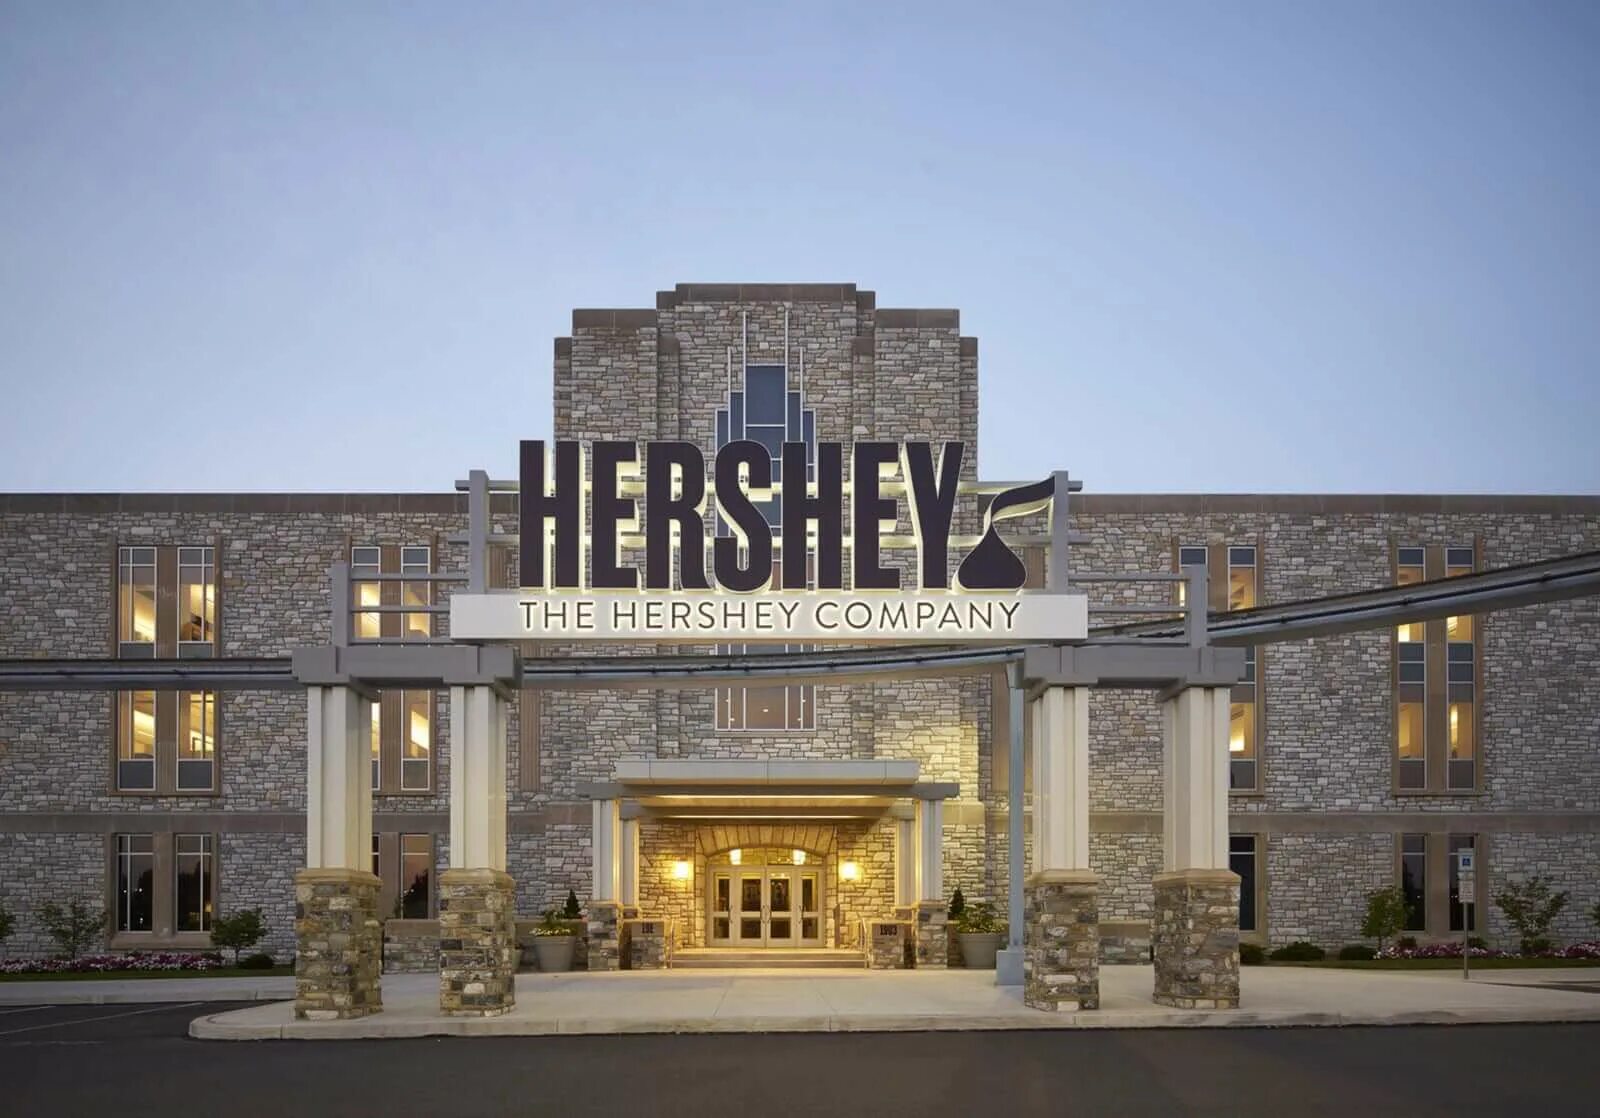 The hershey company. Hershey's Company. Hershey foods. Хёрши город. Hershey's Chocolate World.